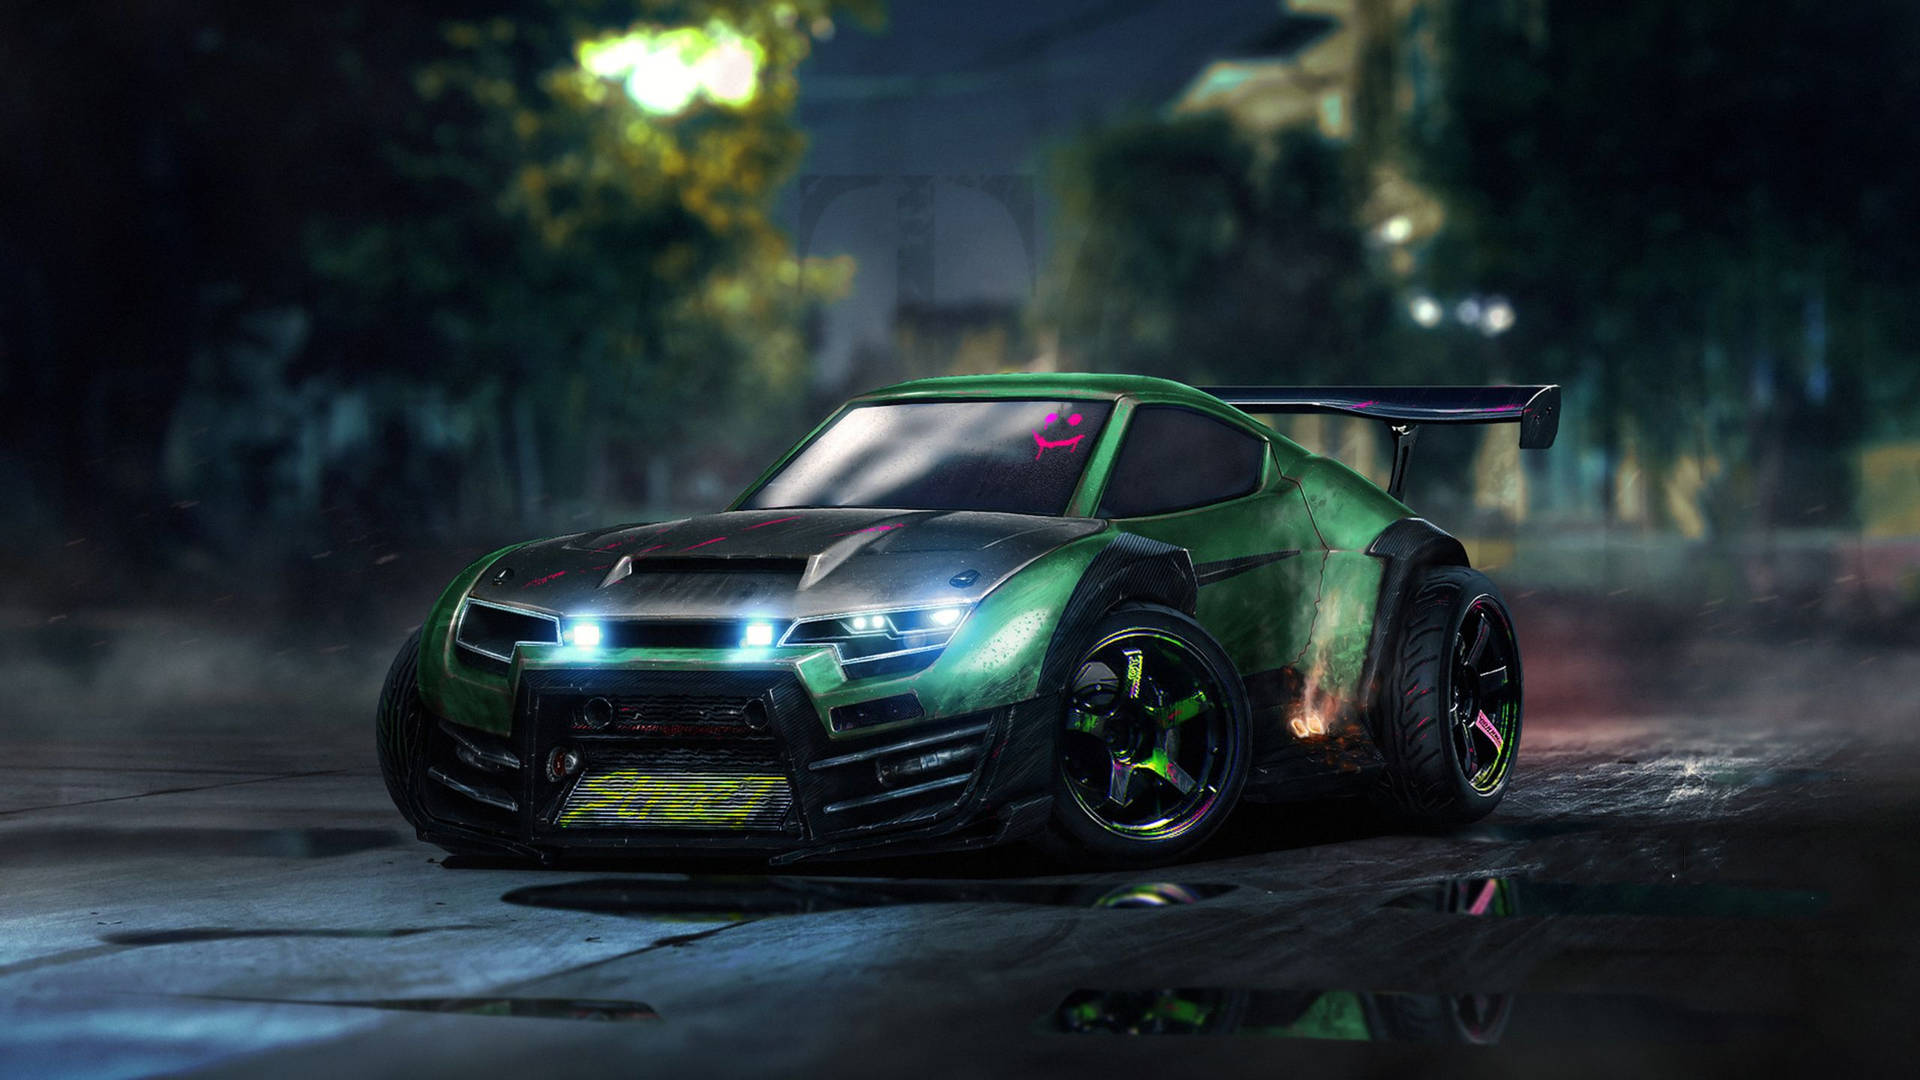 Cool Green Car Rocket League Hd Background